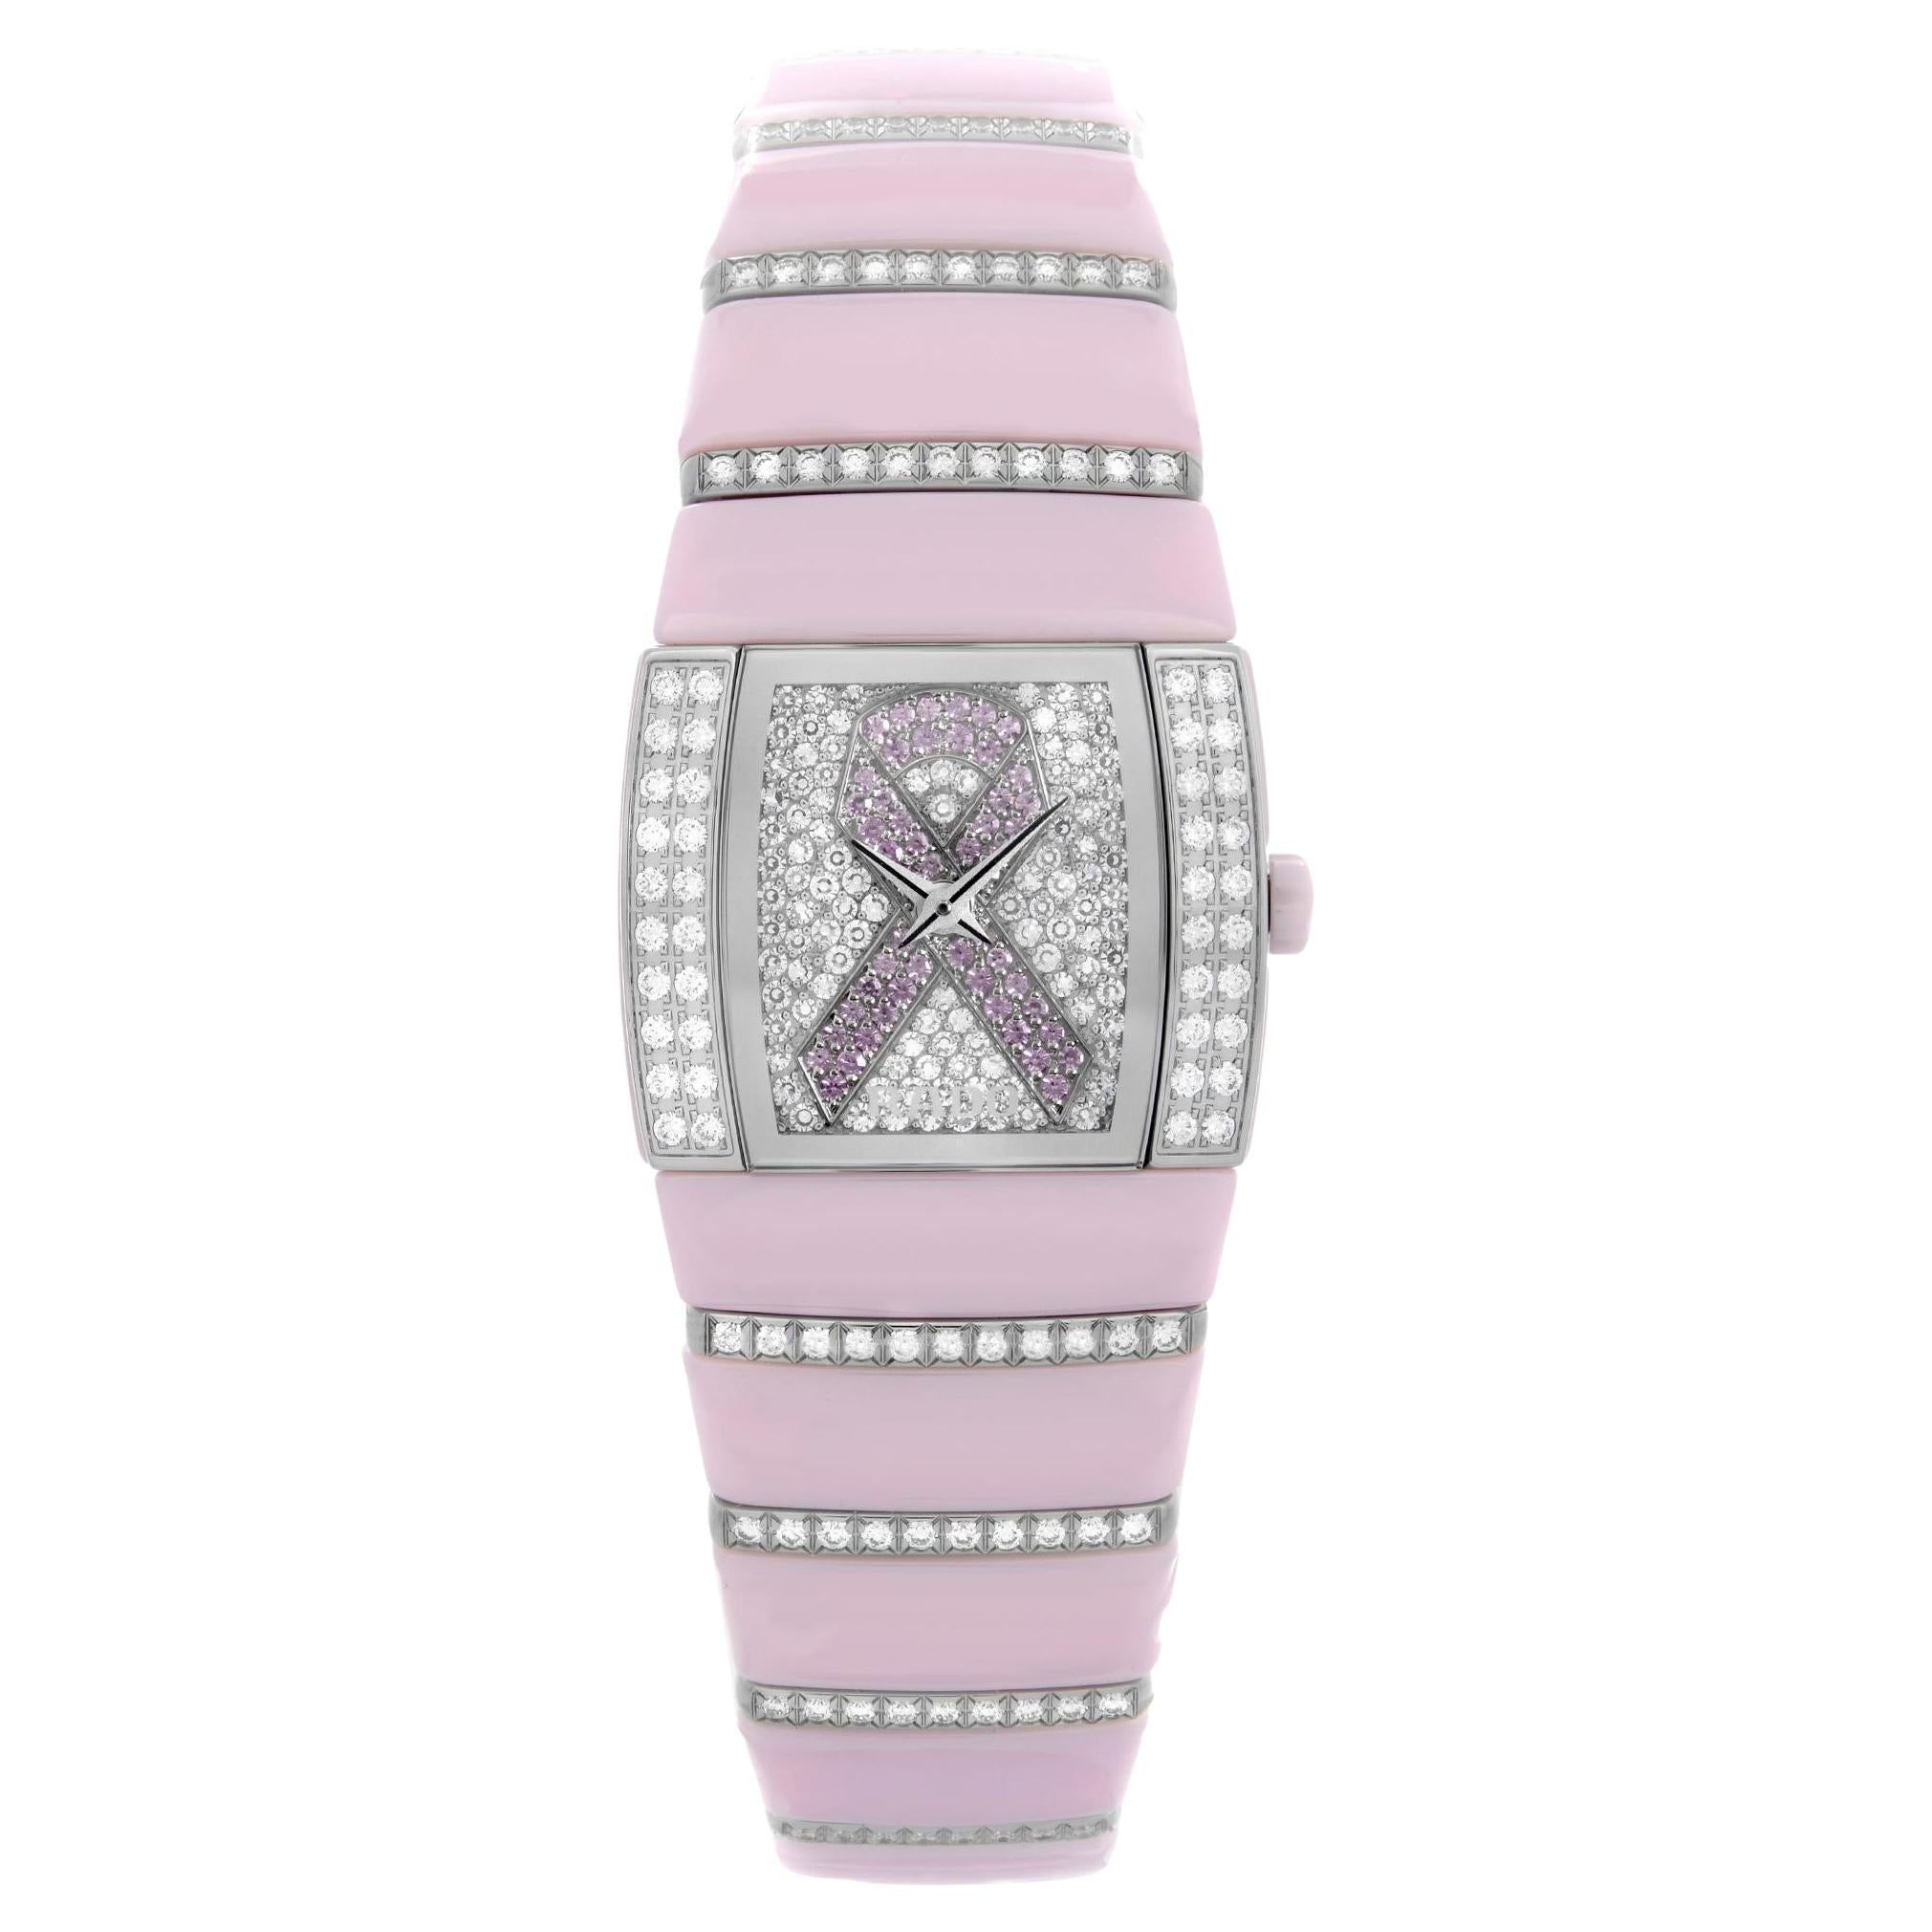 Rado Sintra Jubile Limited Edition Pink Ceramic Diamonds Ladies Watch R13652942 For Sale